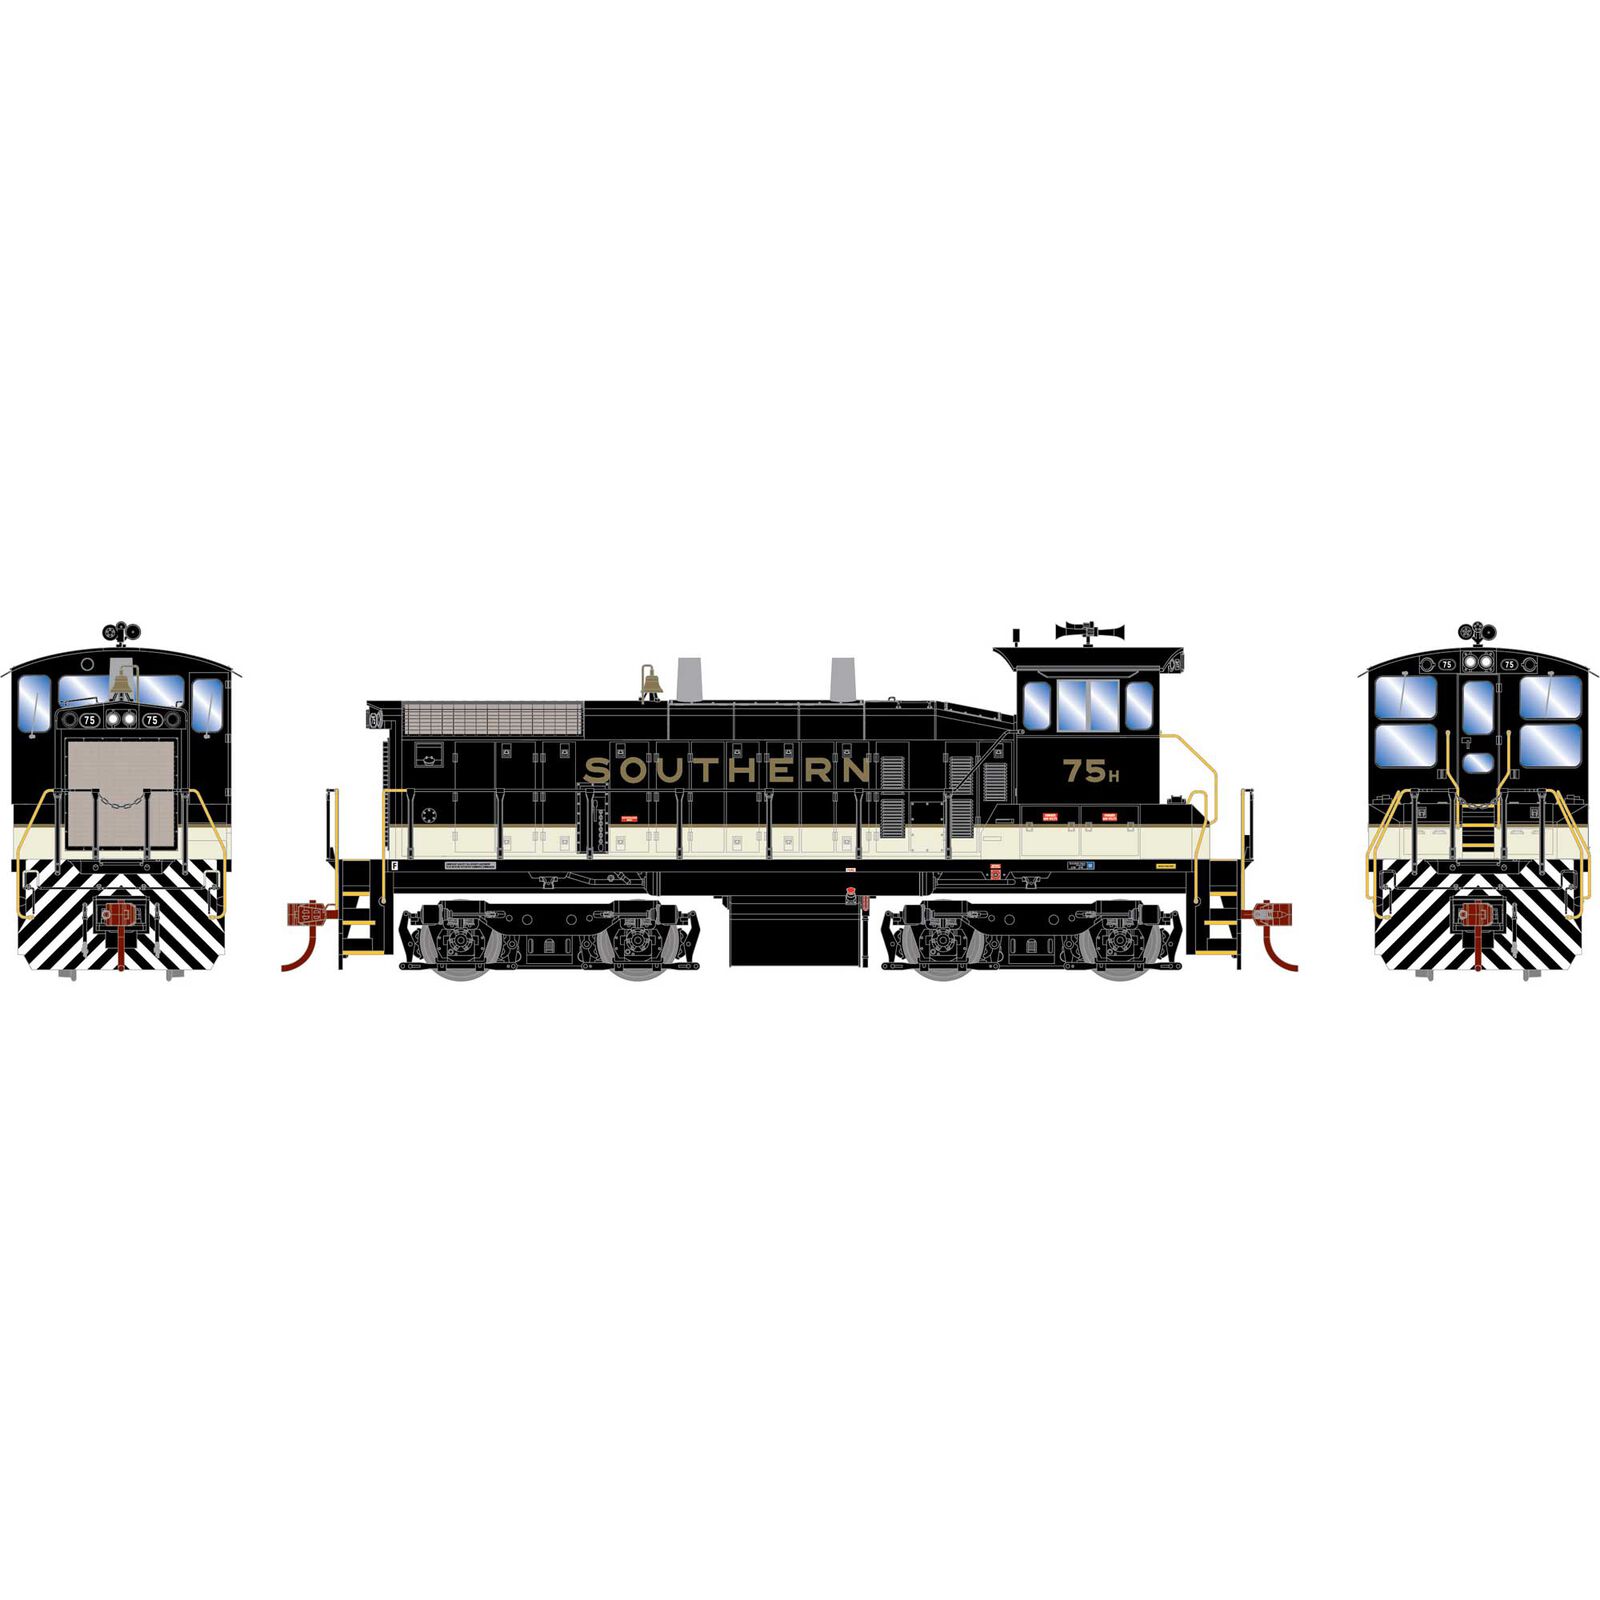 HO SW1500 Locomotive with DCC & Sound, Southern Railway #75H